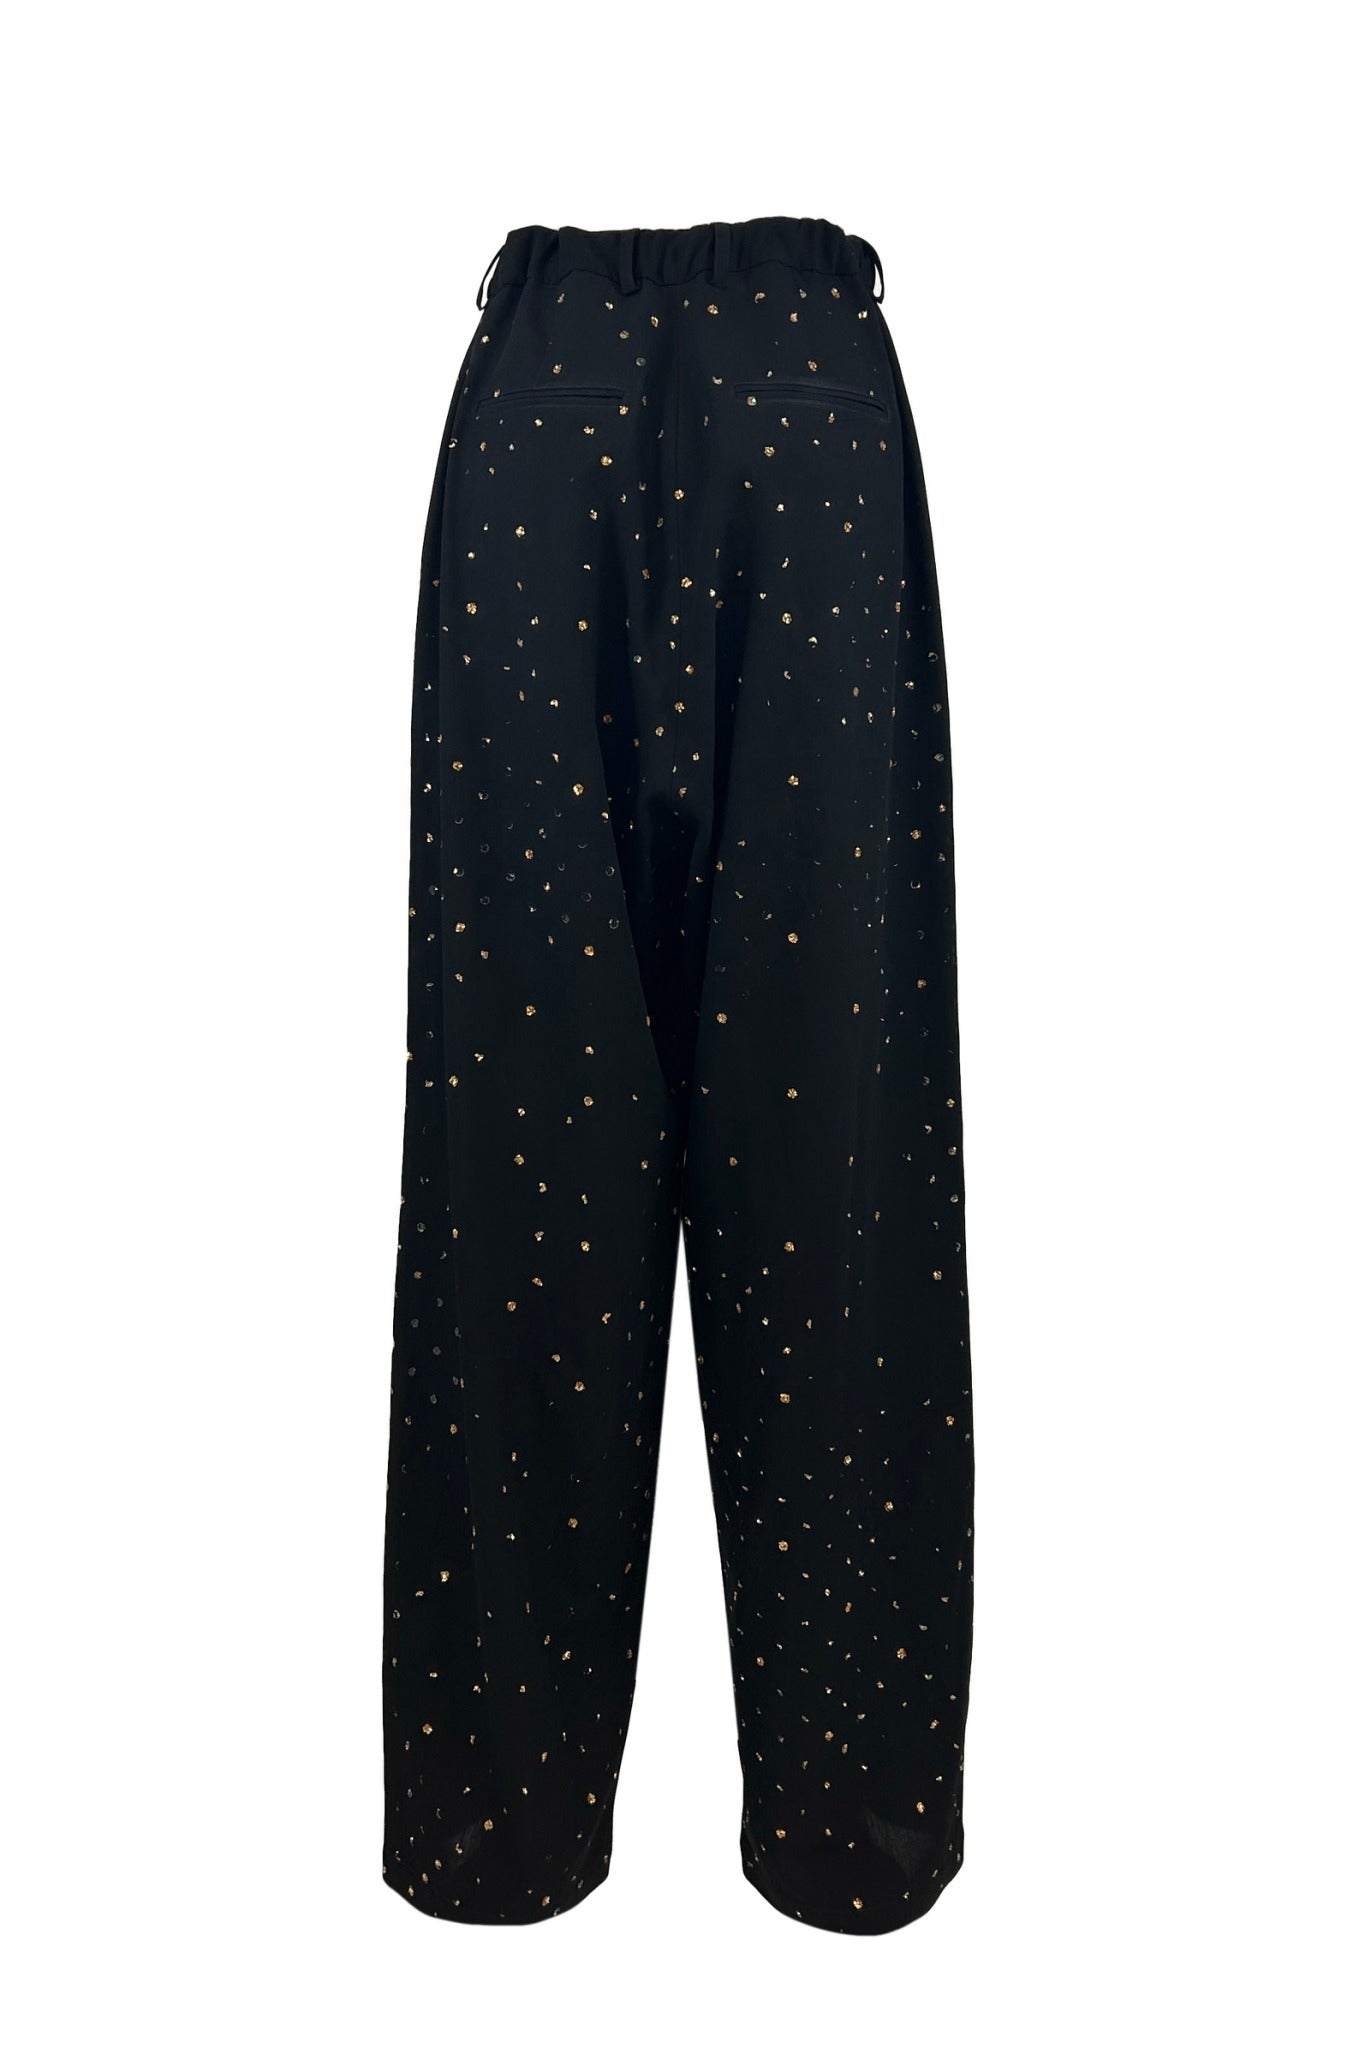 Less Couture Pants / Black-Gold